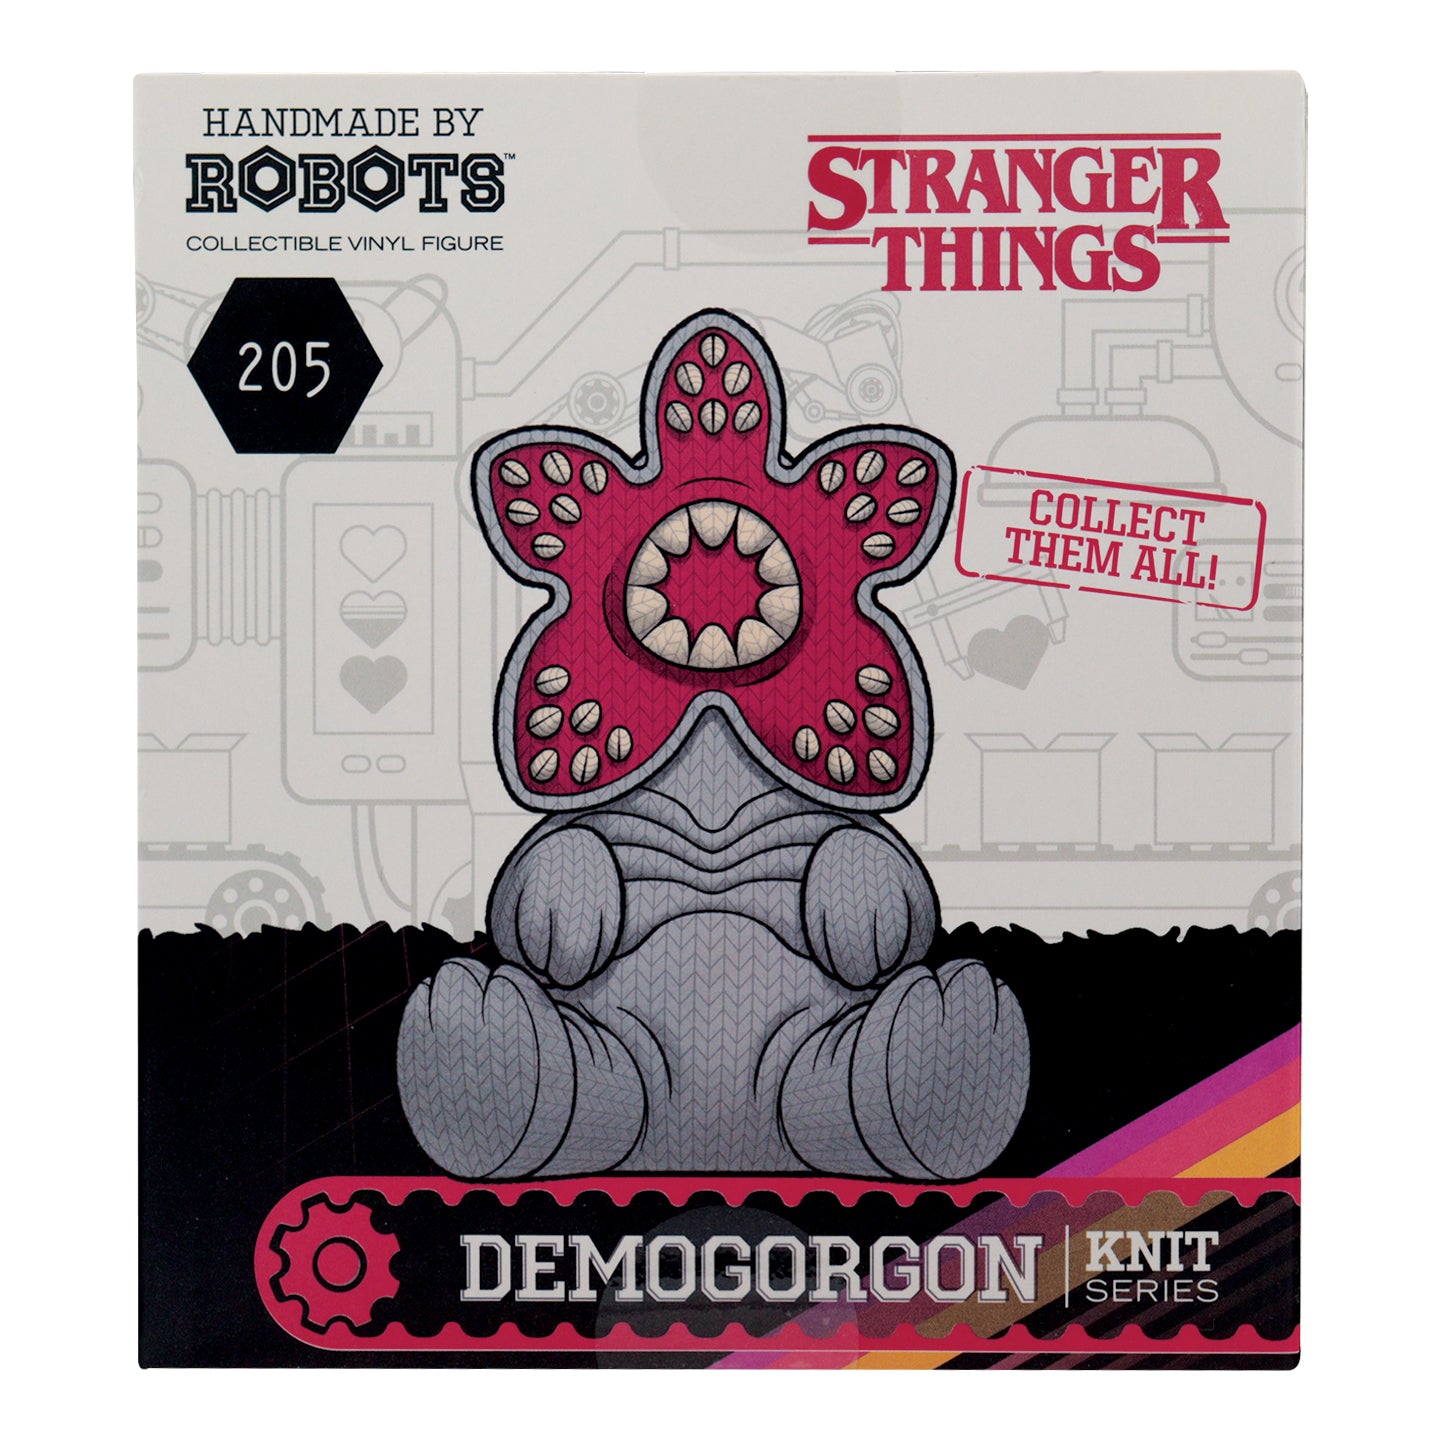 Stranger Things Demogorgon Vinyl Figure from Handmade by Robots